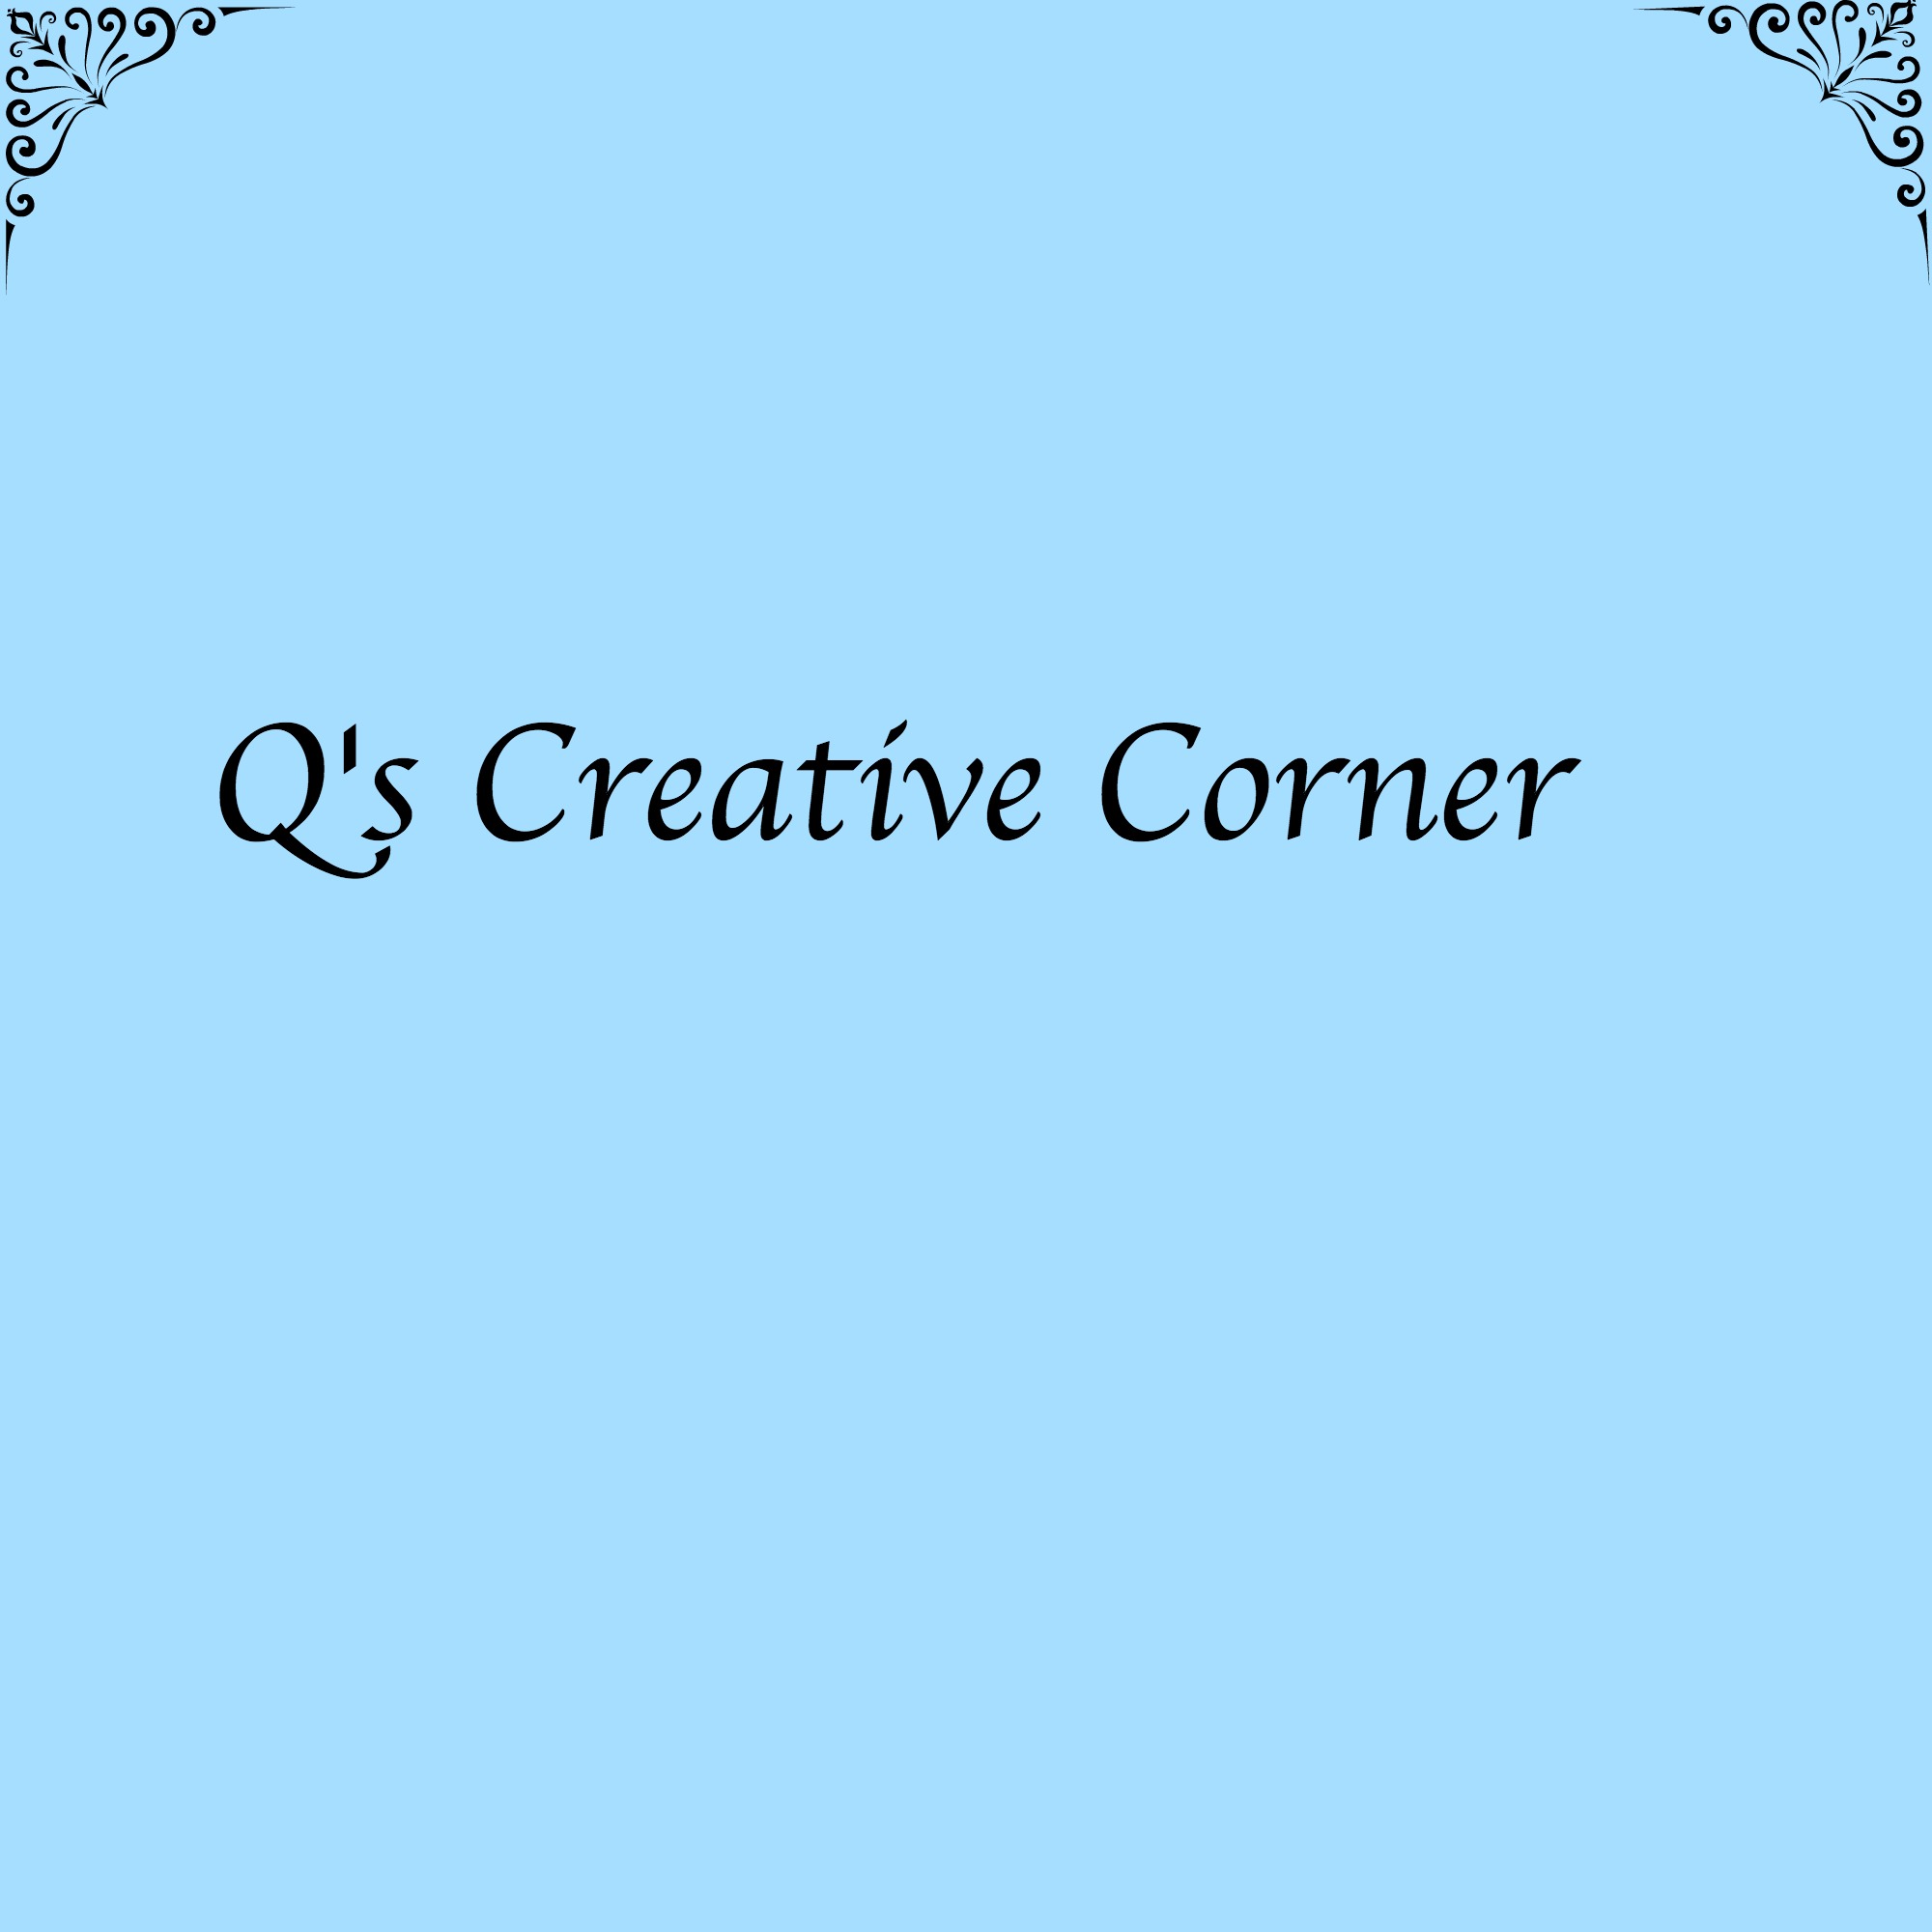 Q's Creative Corner